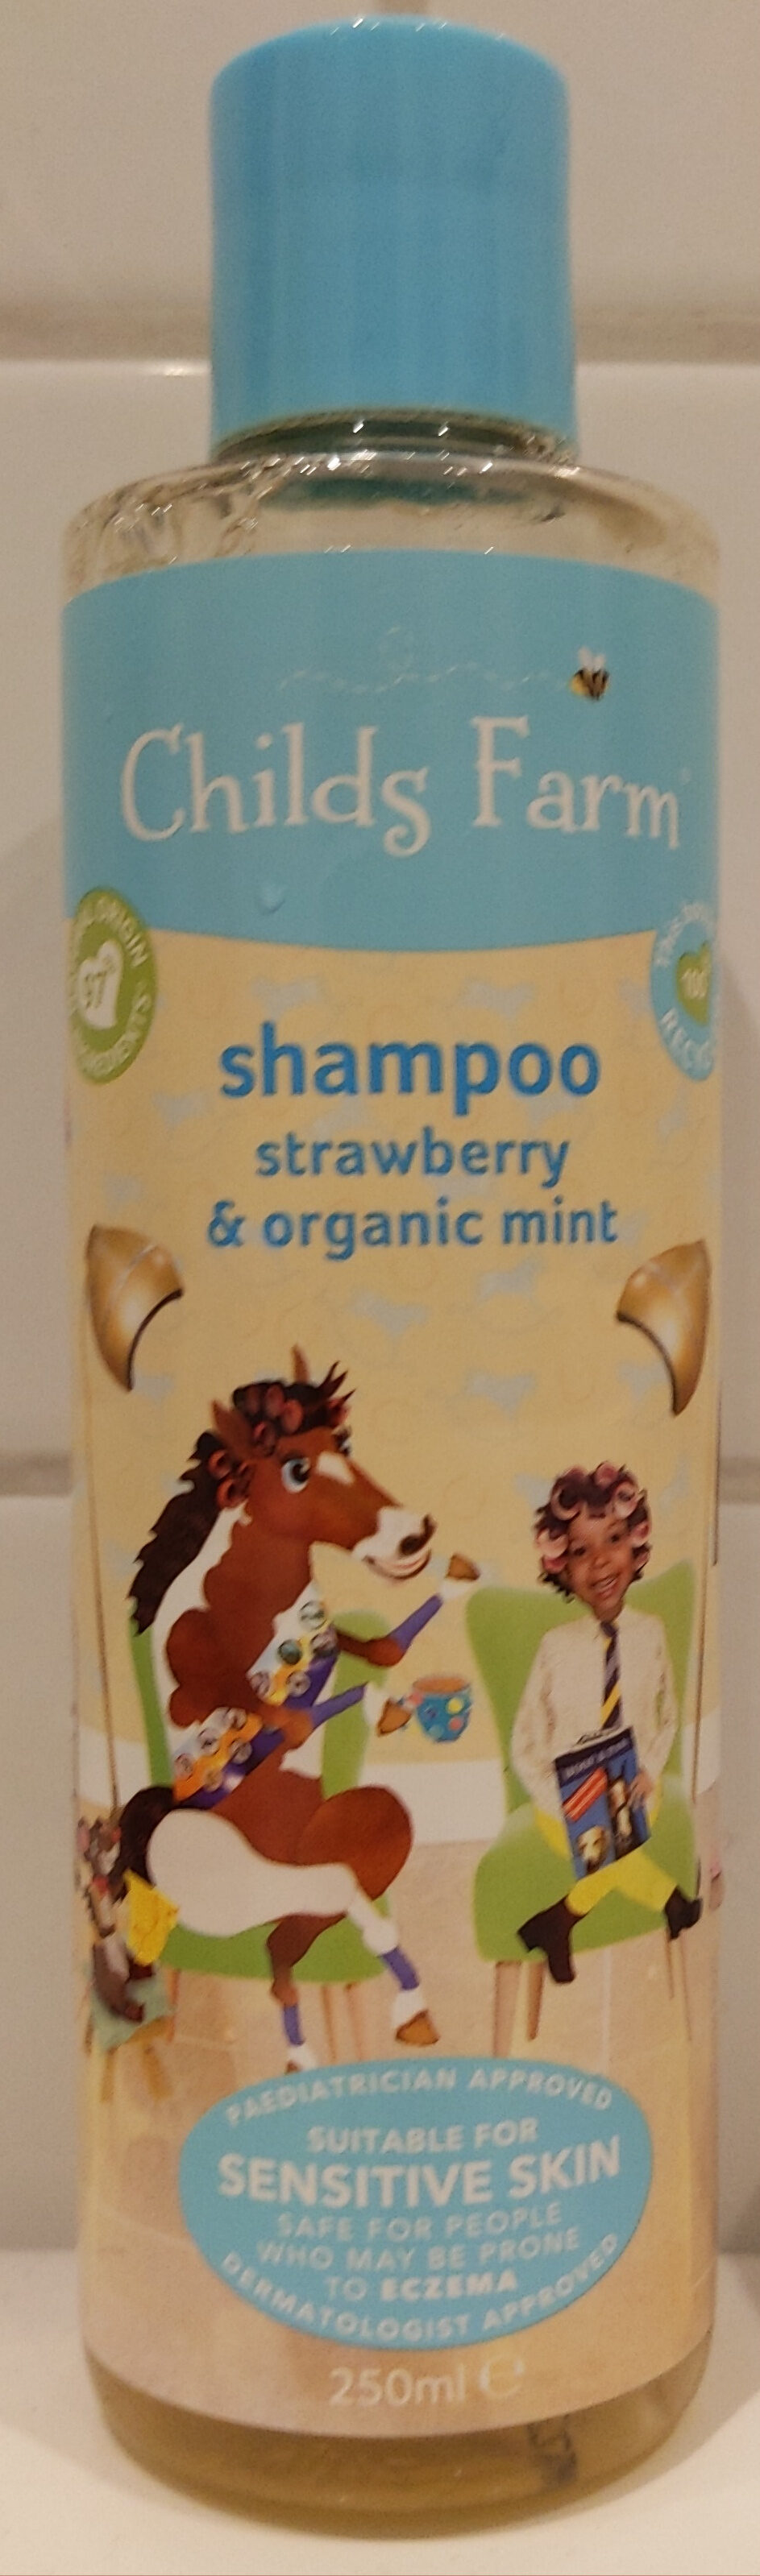 Strawberry and organic mint shampoo - Produto - en